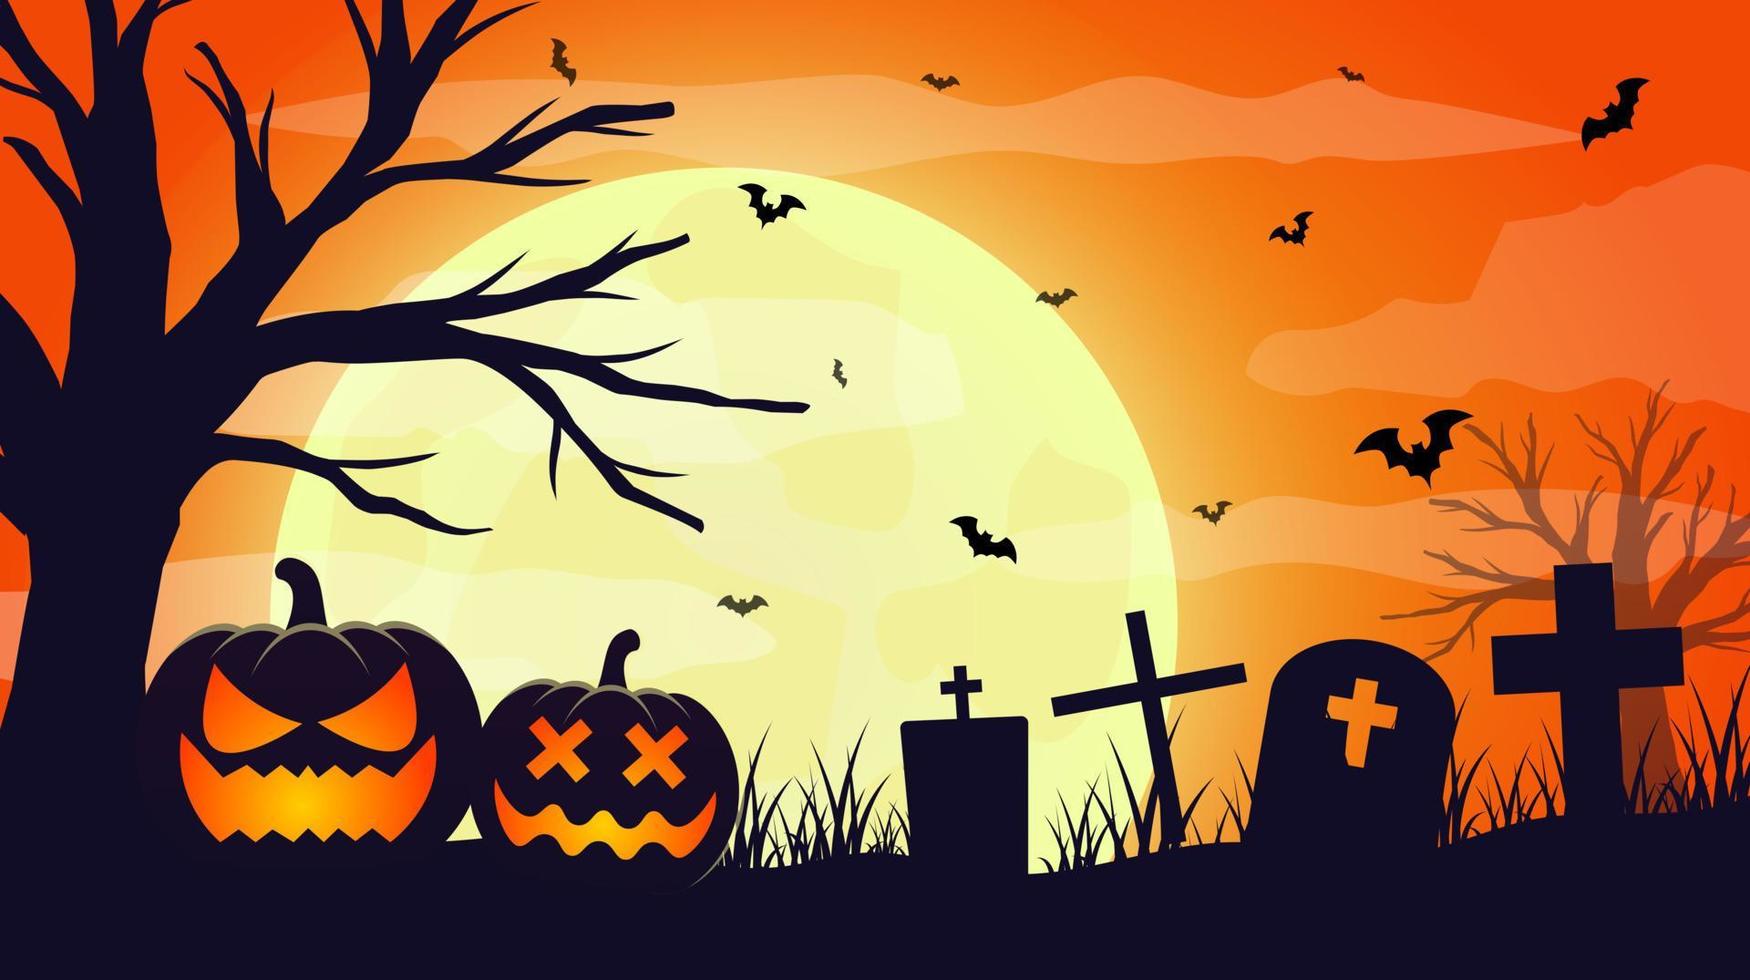 Halloween night background with silhouettes of halloween pumpkins, bats, graves on full moon. Halloween illustration on orange background vector